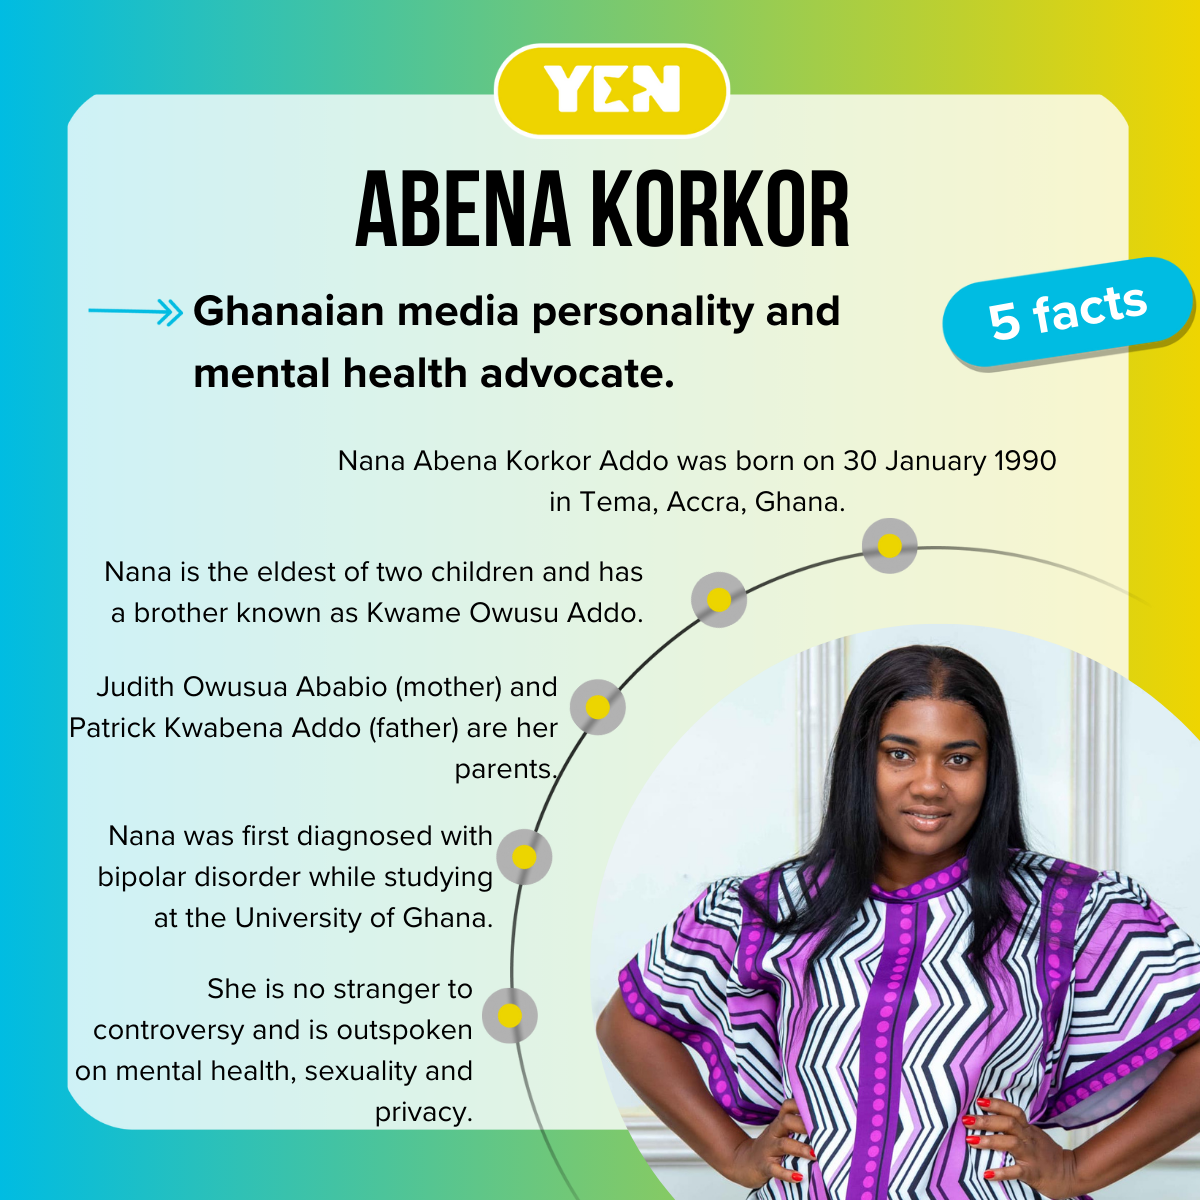 Top five facts about Abena Korkor